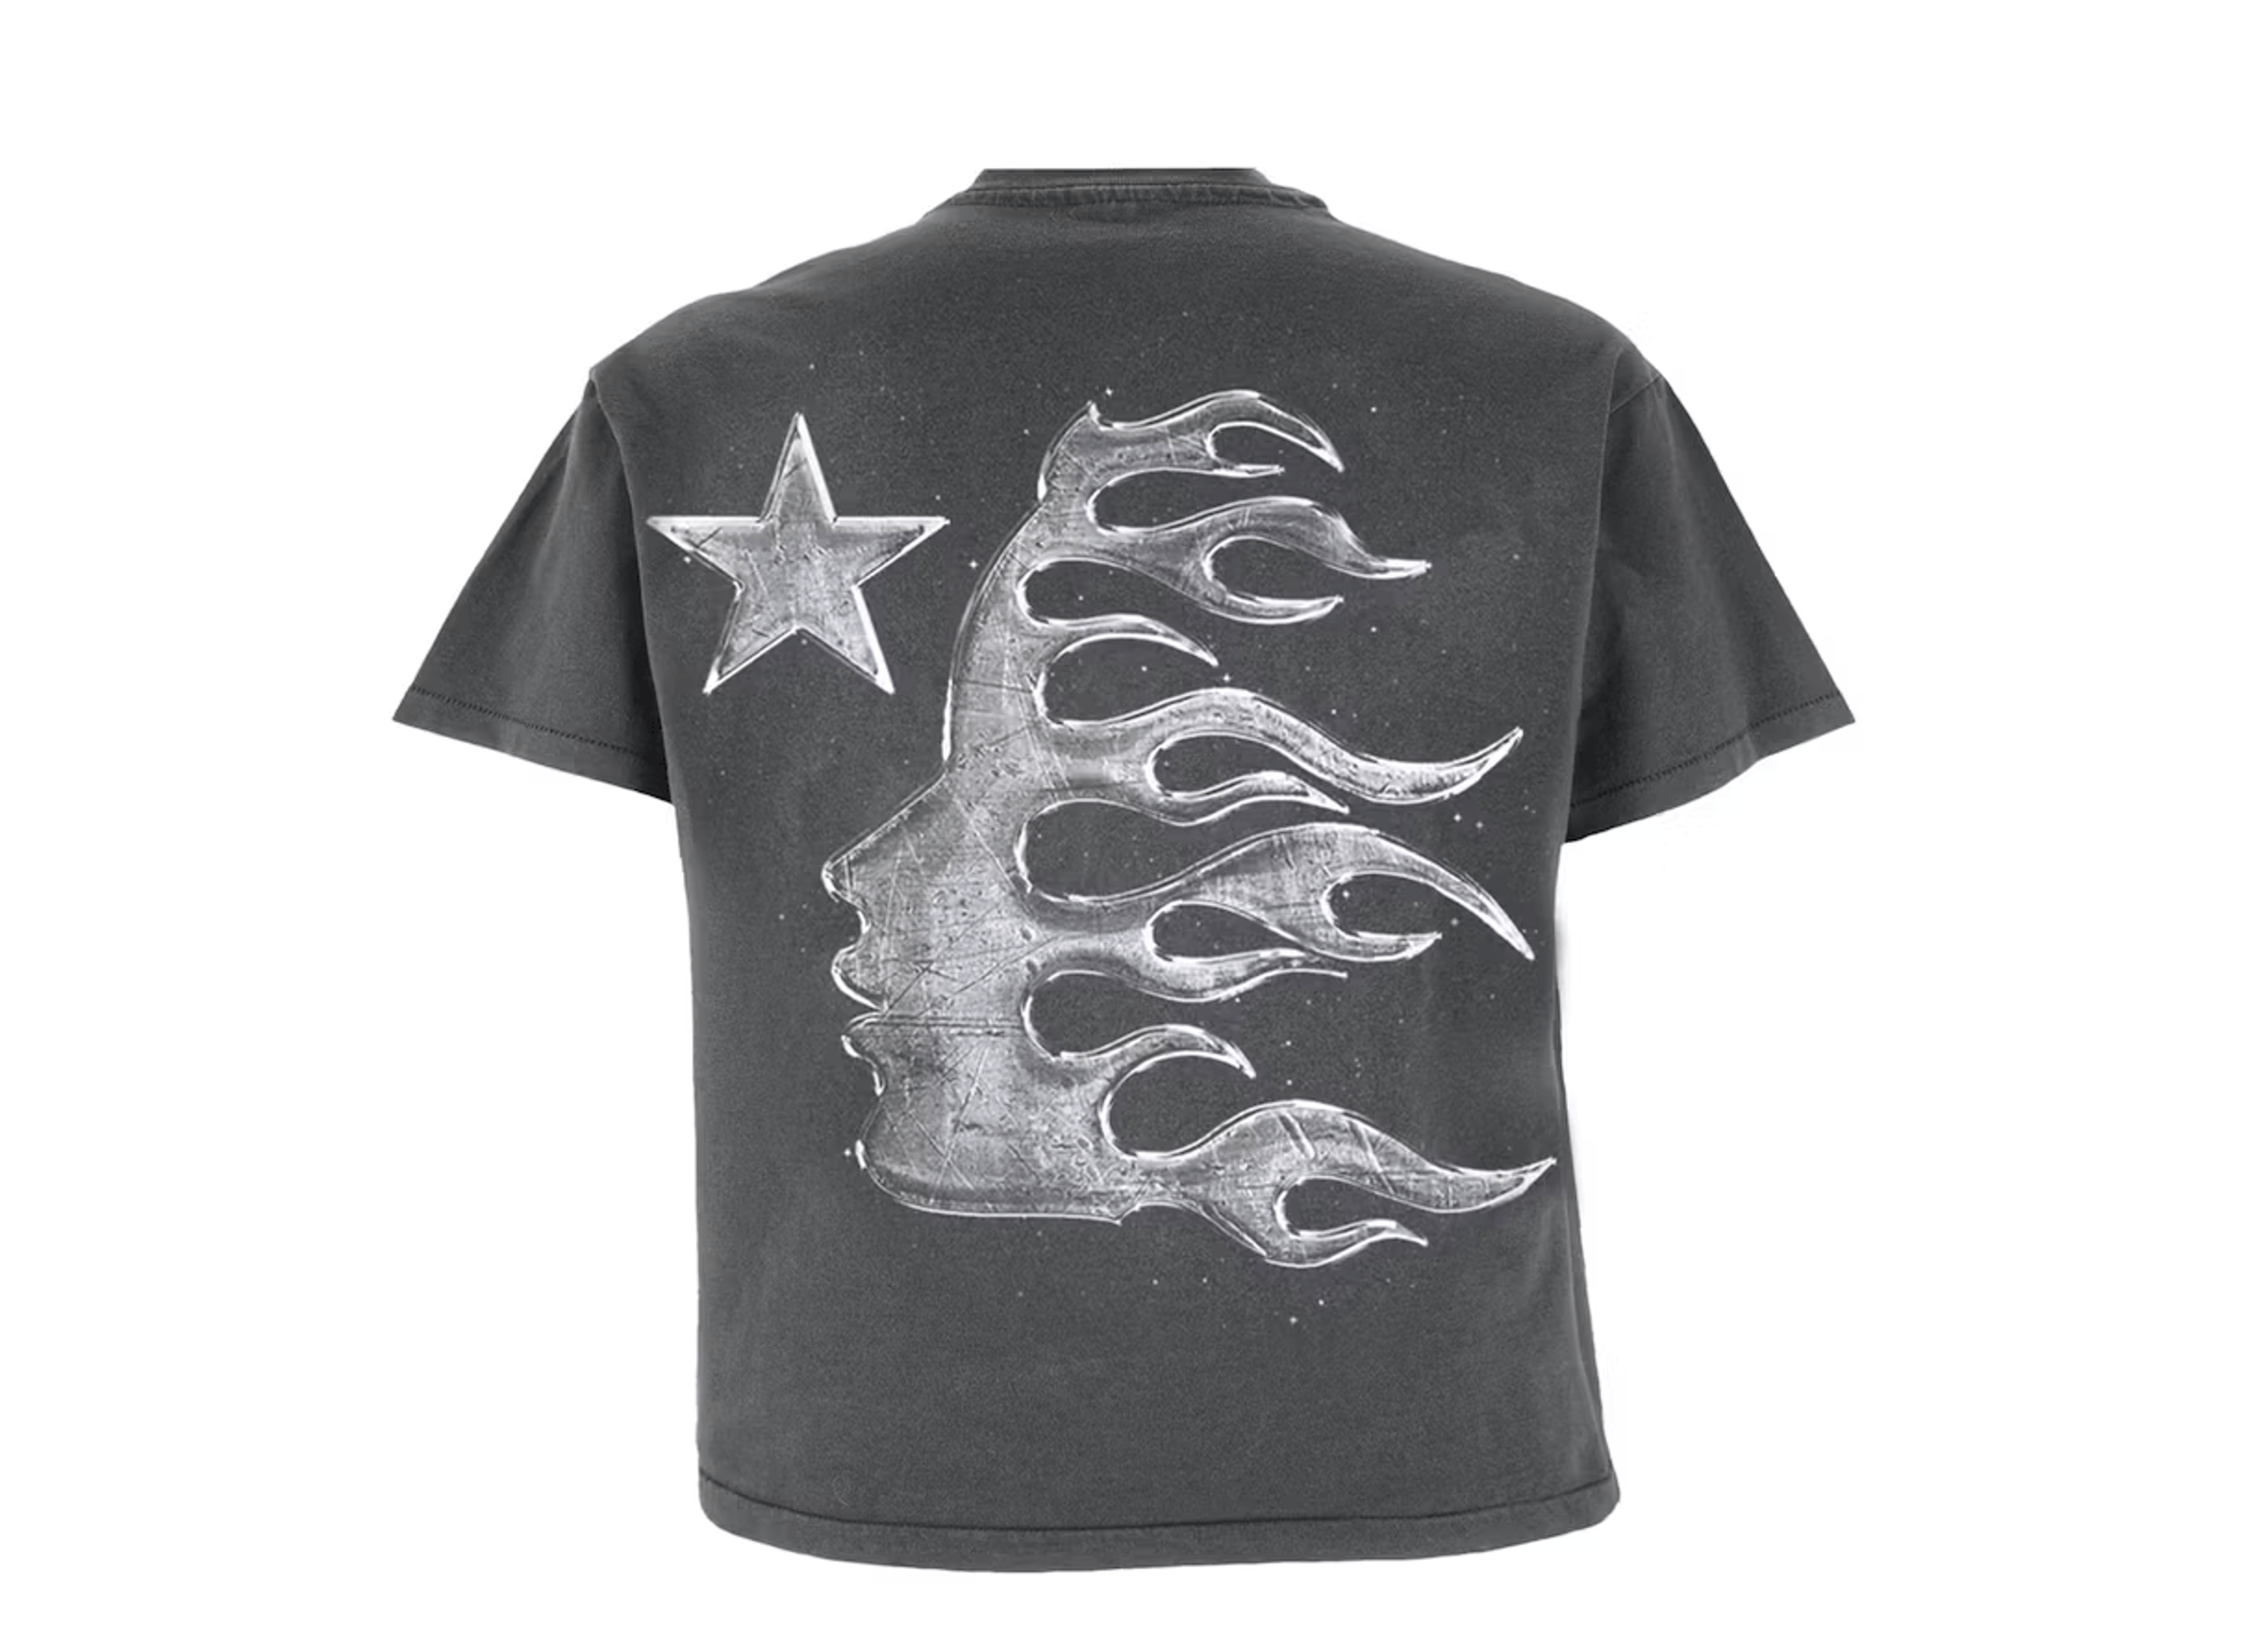 Alternate View 1 of Hellstar Studios Chrome Logo Short Sleeve Tee Shirt Black